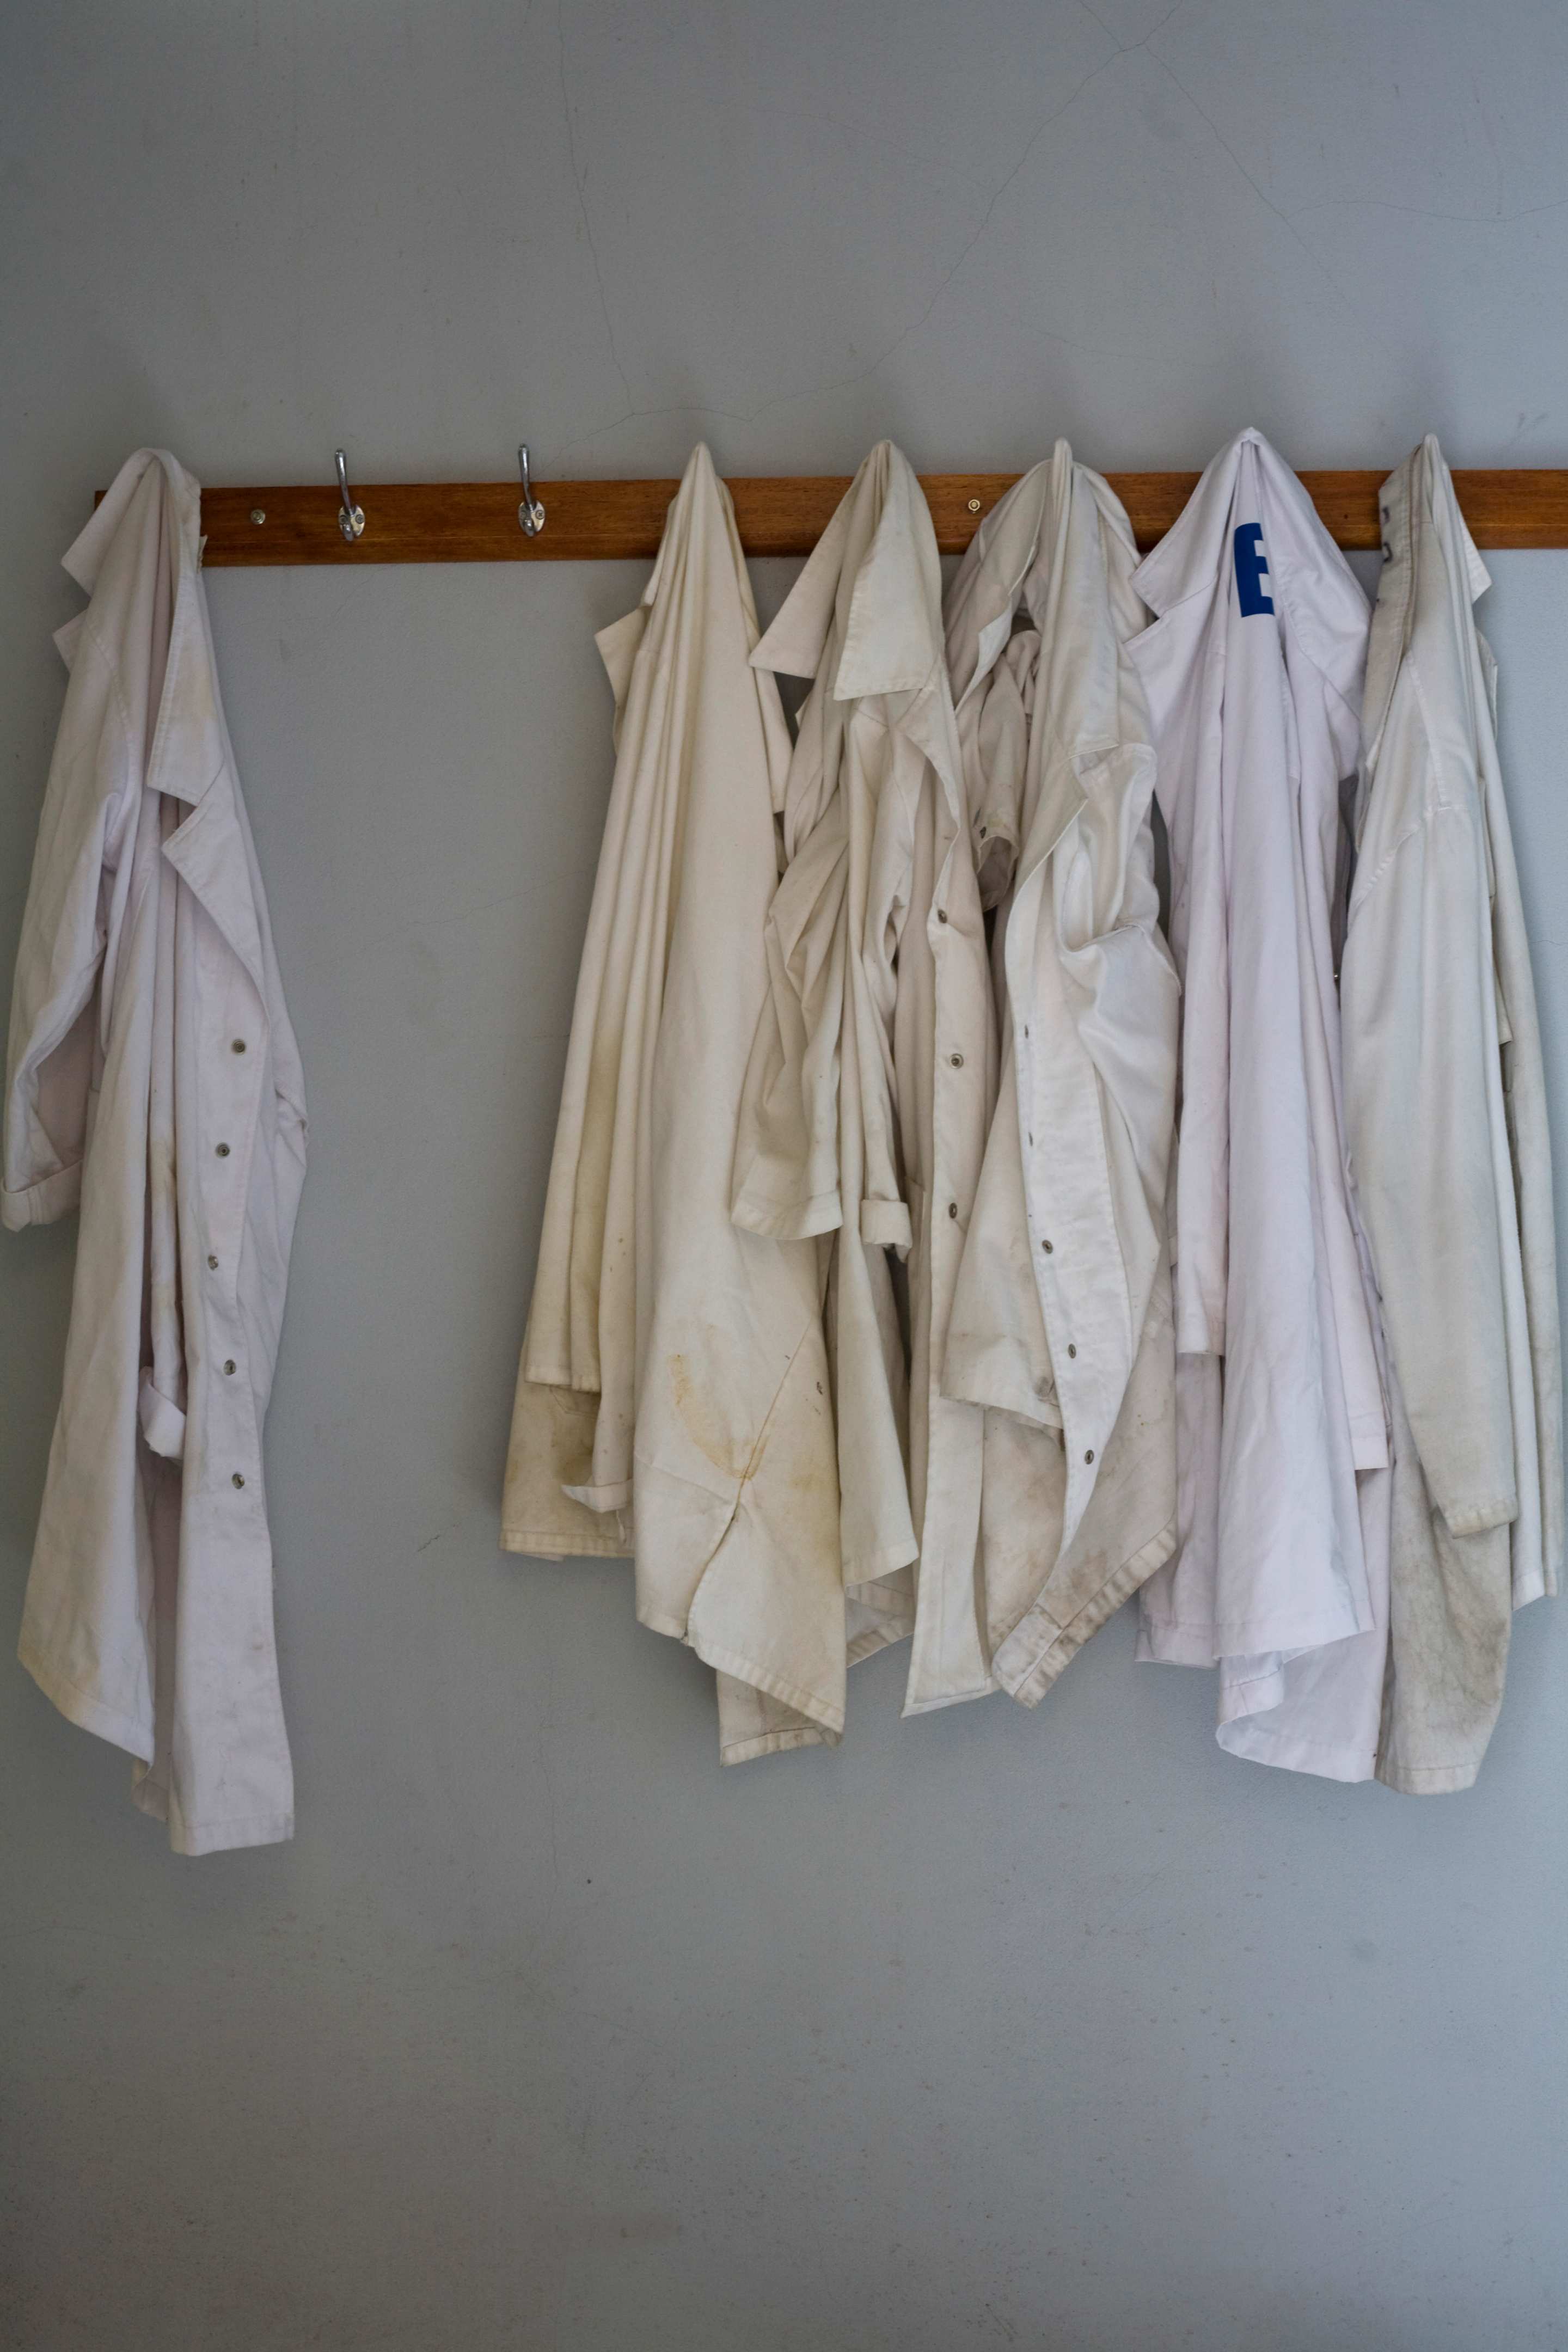 Lab coats on a hook